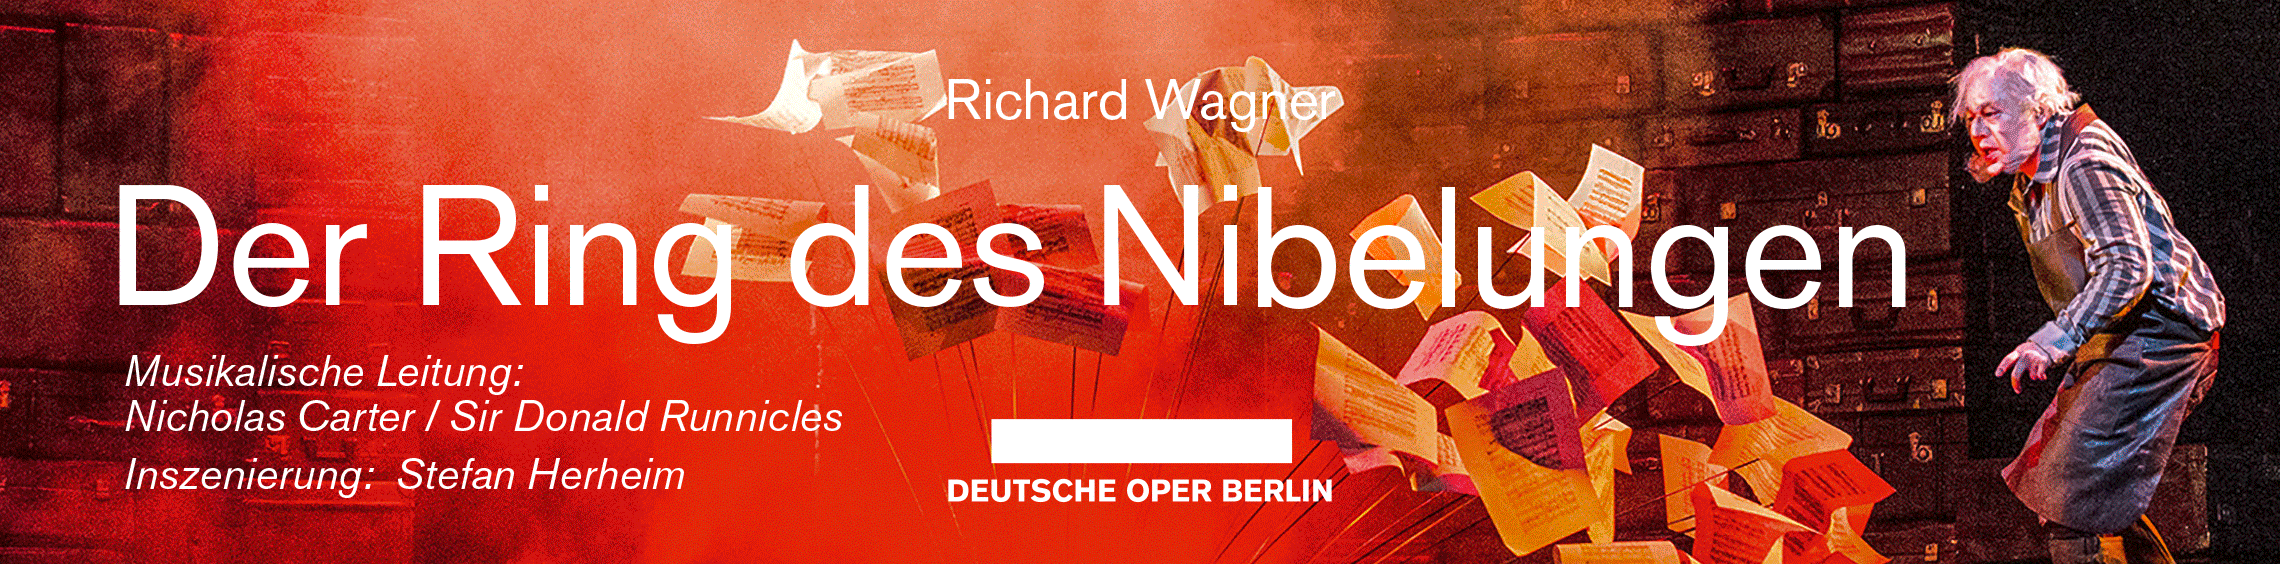 Der Ring des Nibelungen - Deutsche Oper Berlin